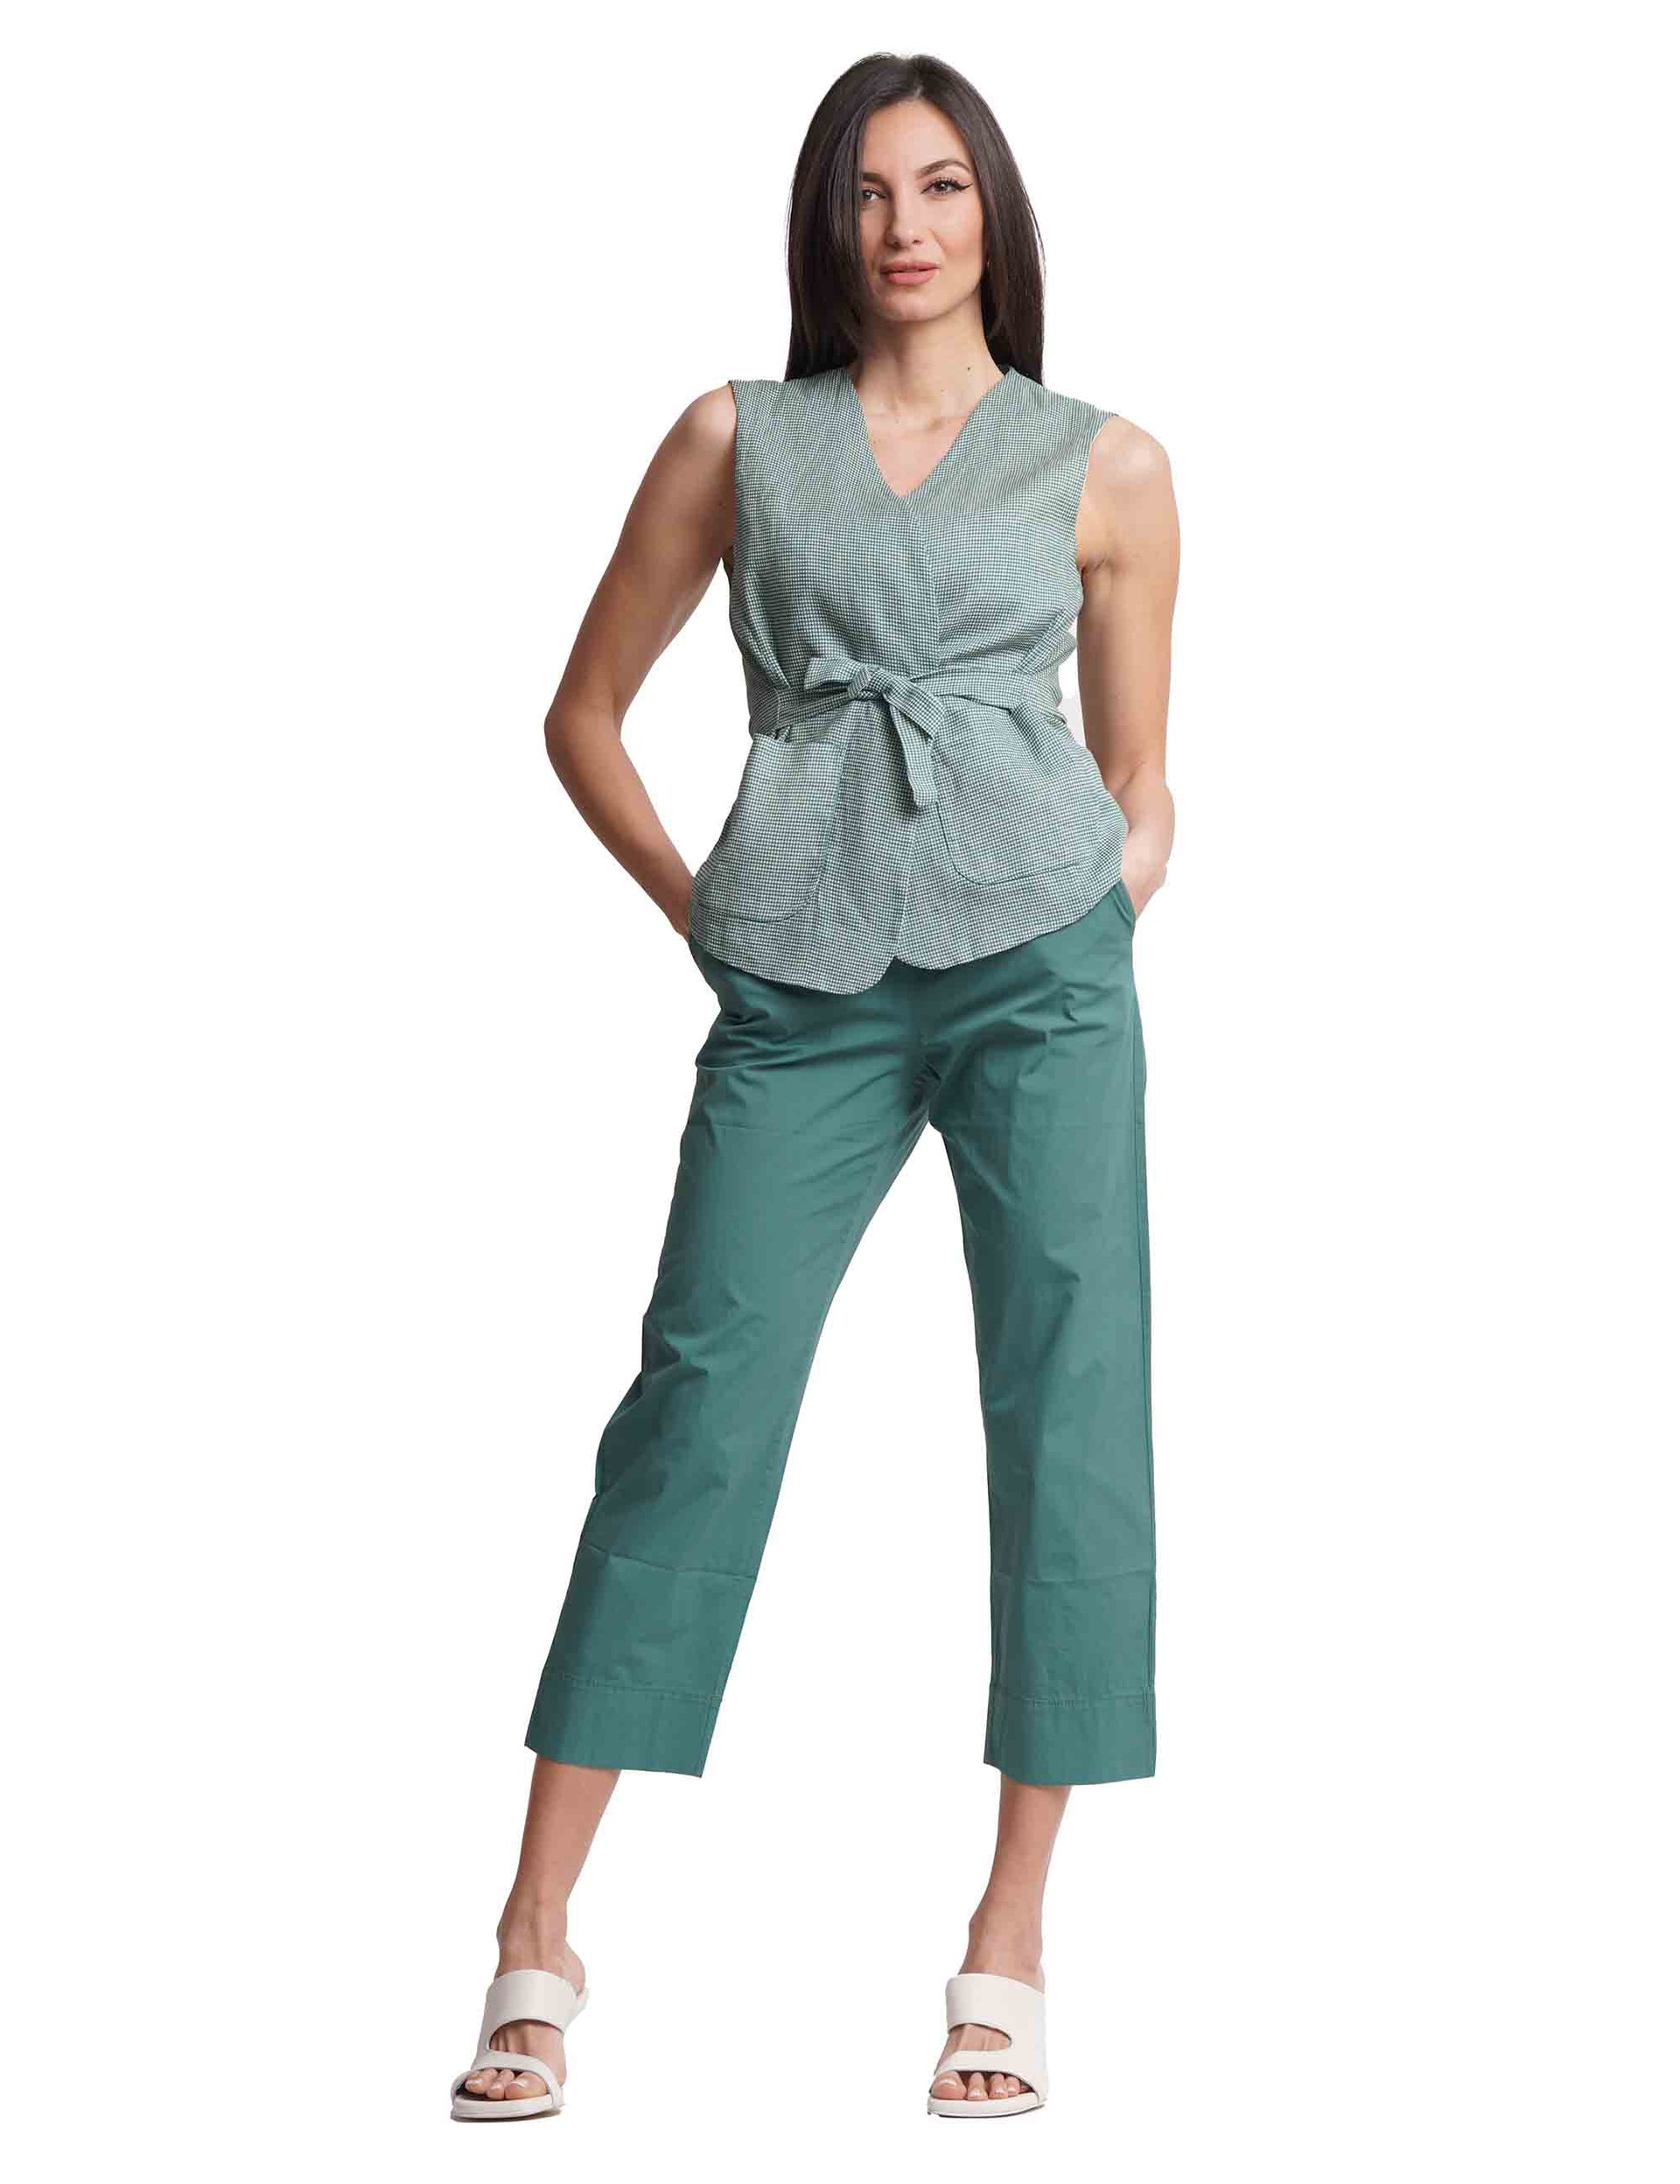 Women's green linen waistcoat with belt